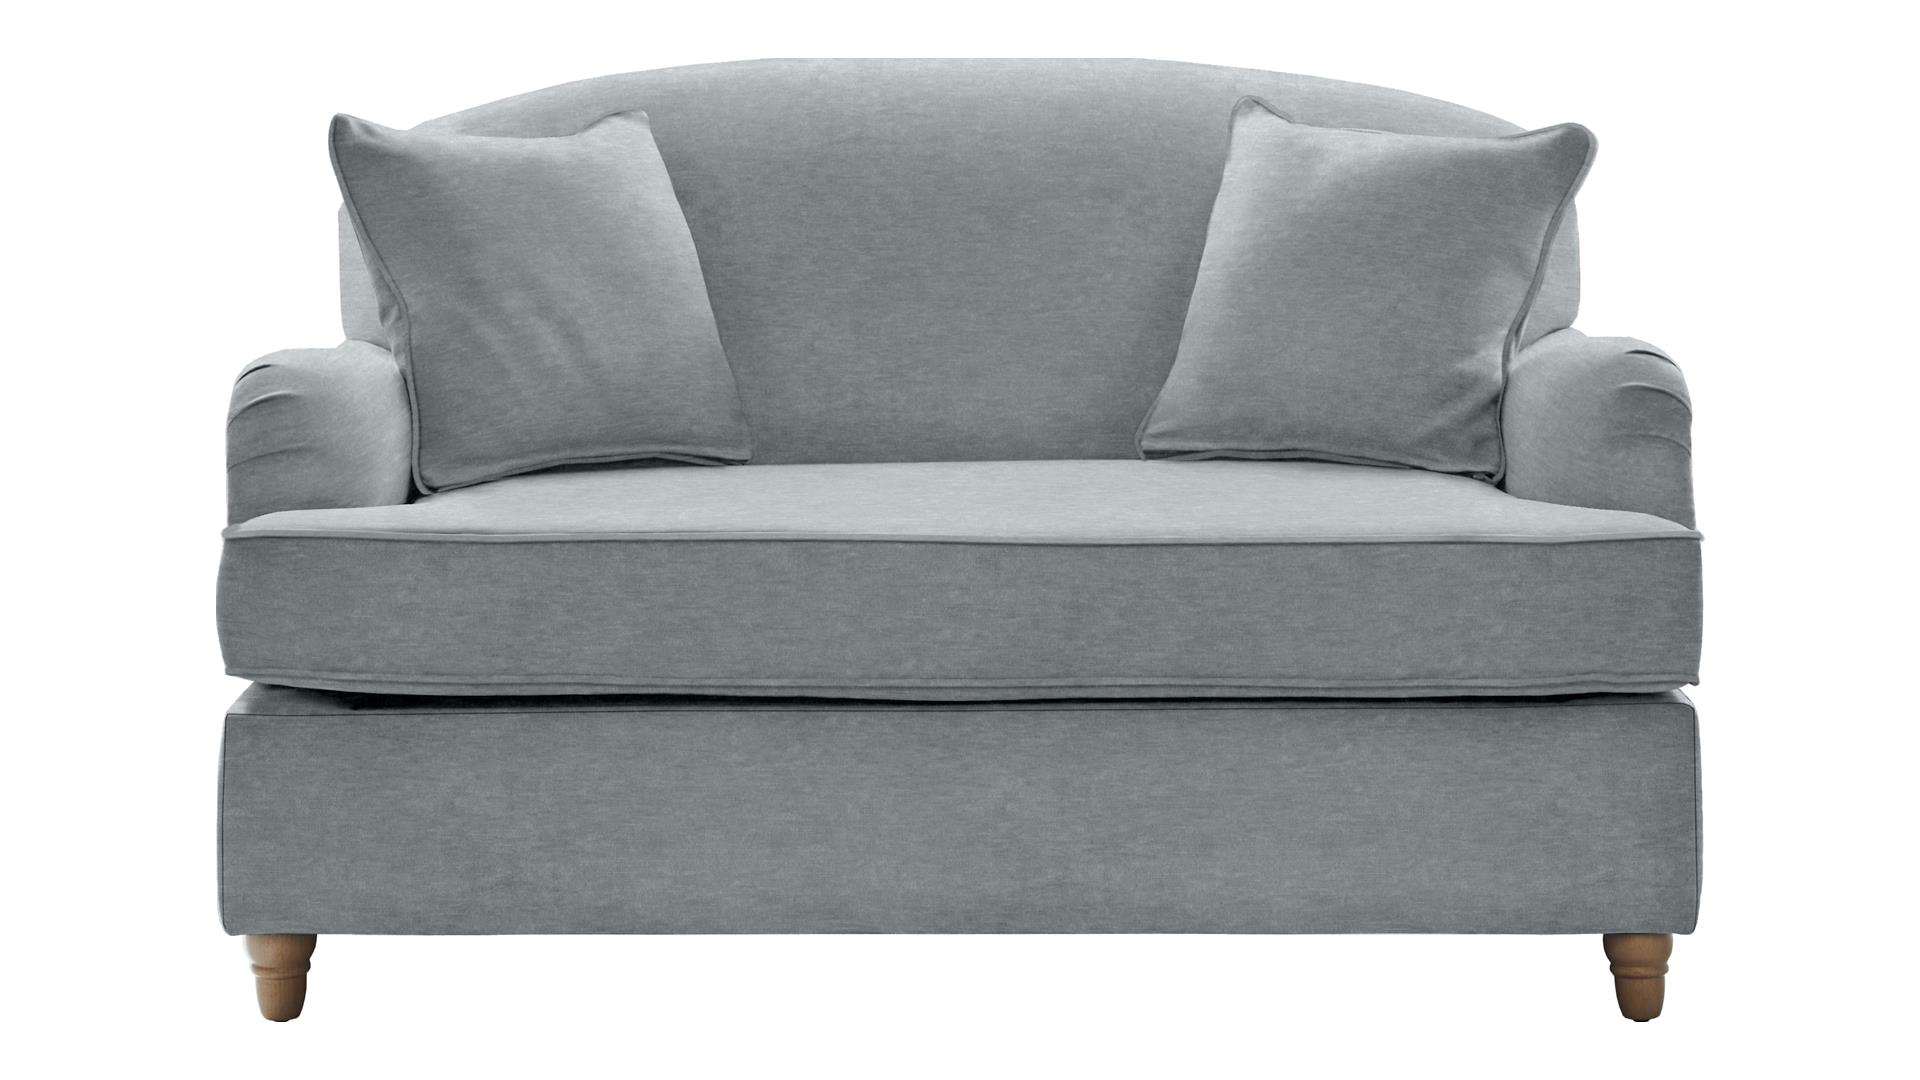 The Appledoe Love Seat Sofa Bed